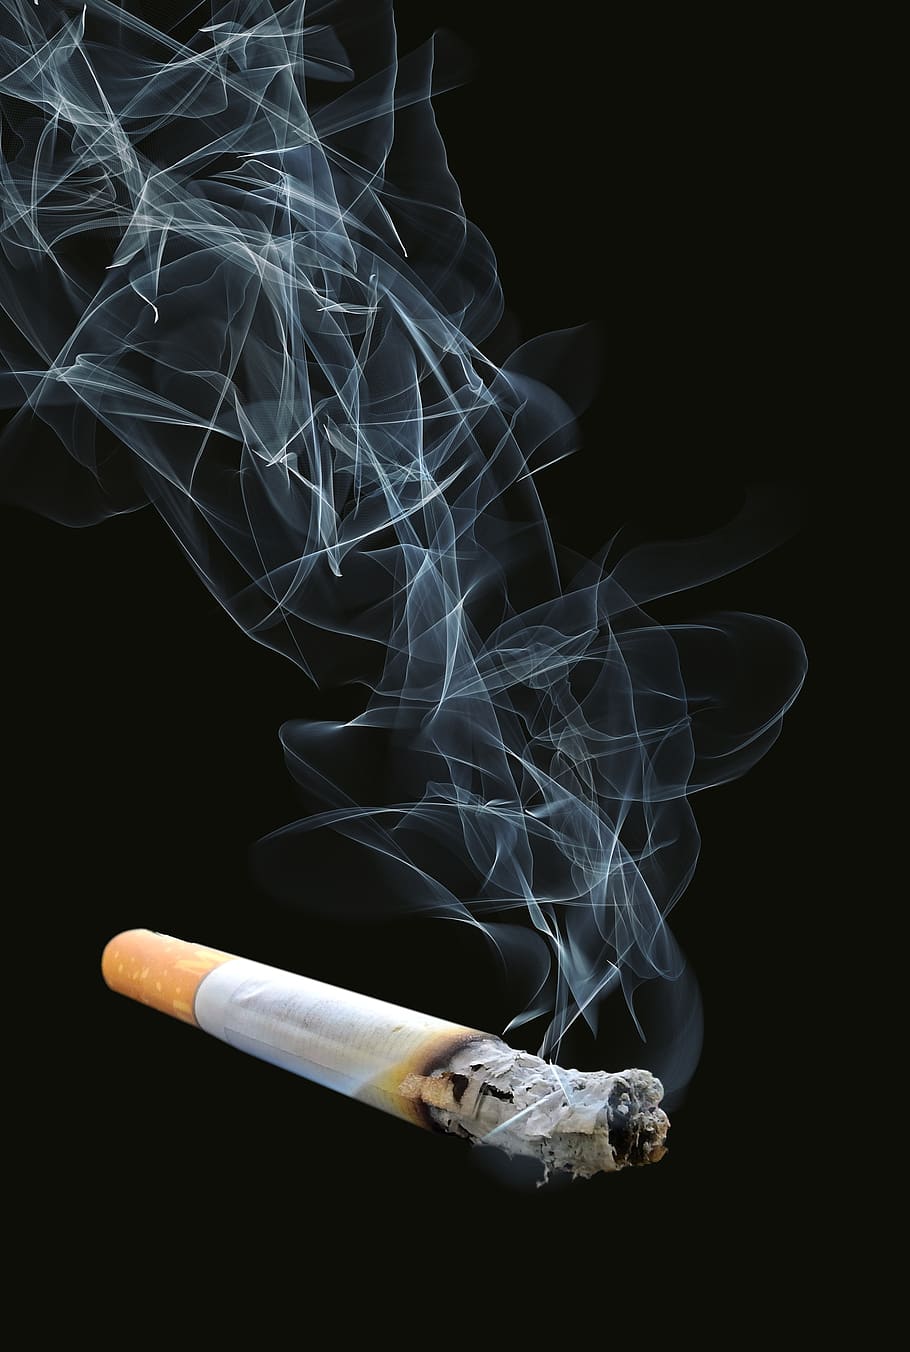 cigarette, smoking, smoke, ash, addiction, unhealthy, smoke - physical structure, warning sign, sign, smoking issues